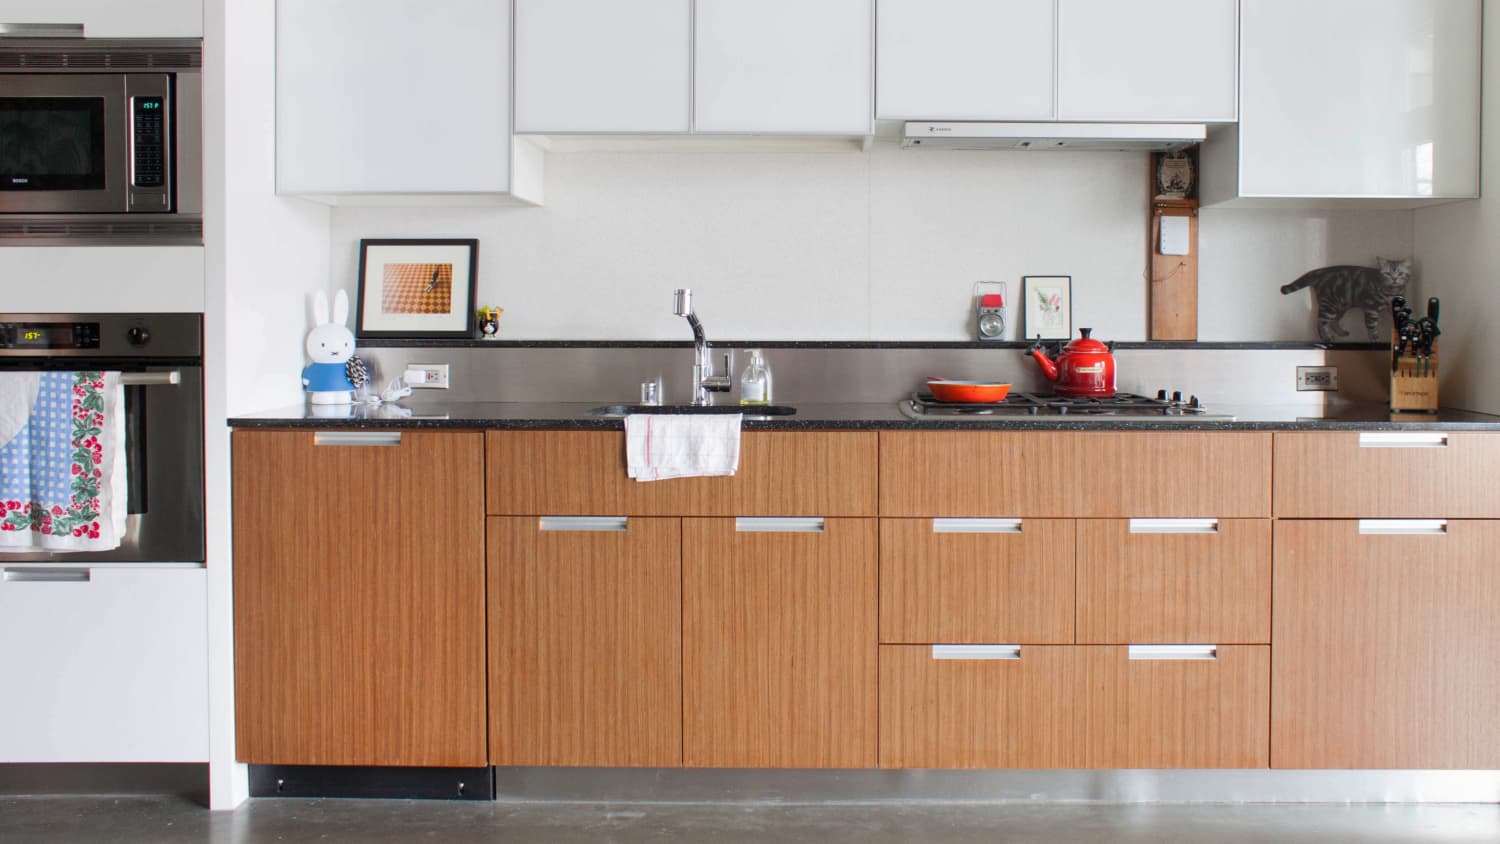 kitchen design ar apps - remodel layout ideas | apartment